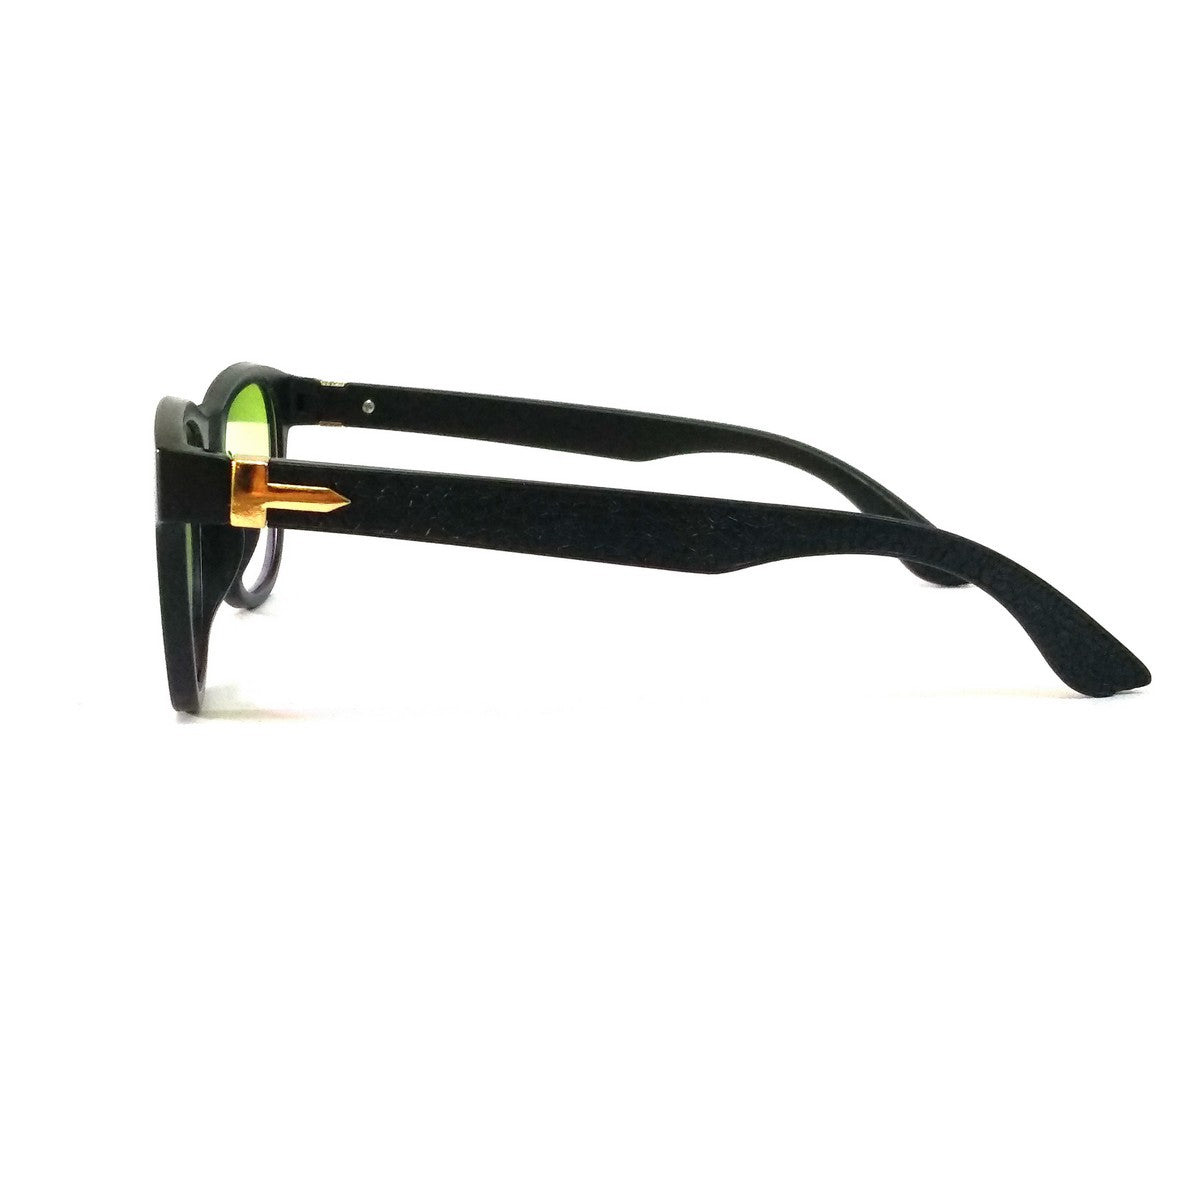 Green Mirror Sunglasses for Men Women 553